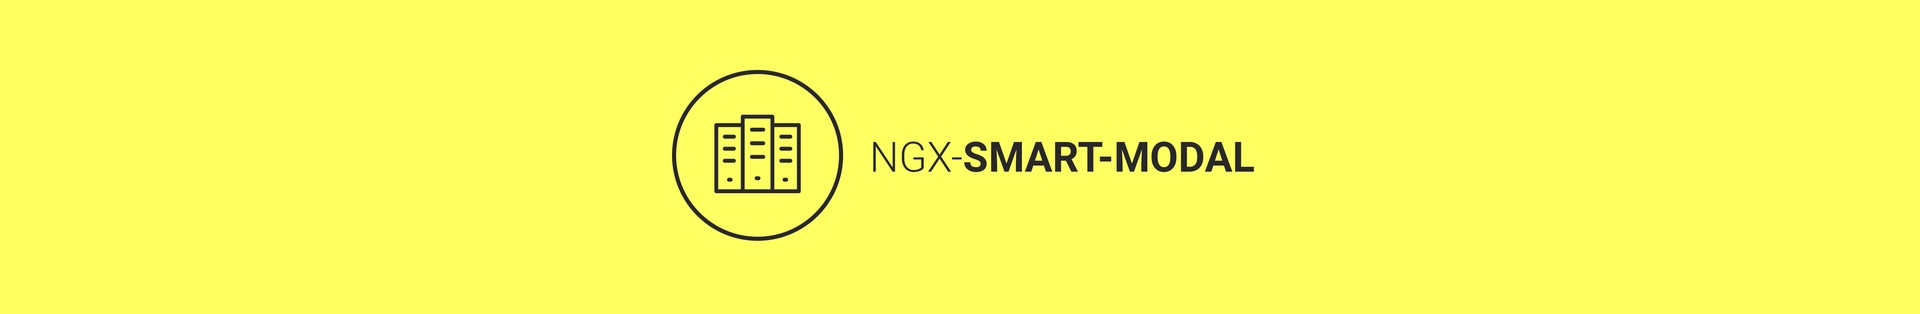 ngx-smart-modal-banner